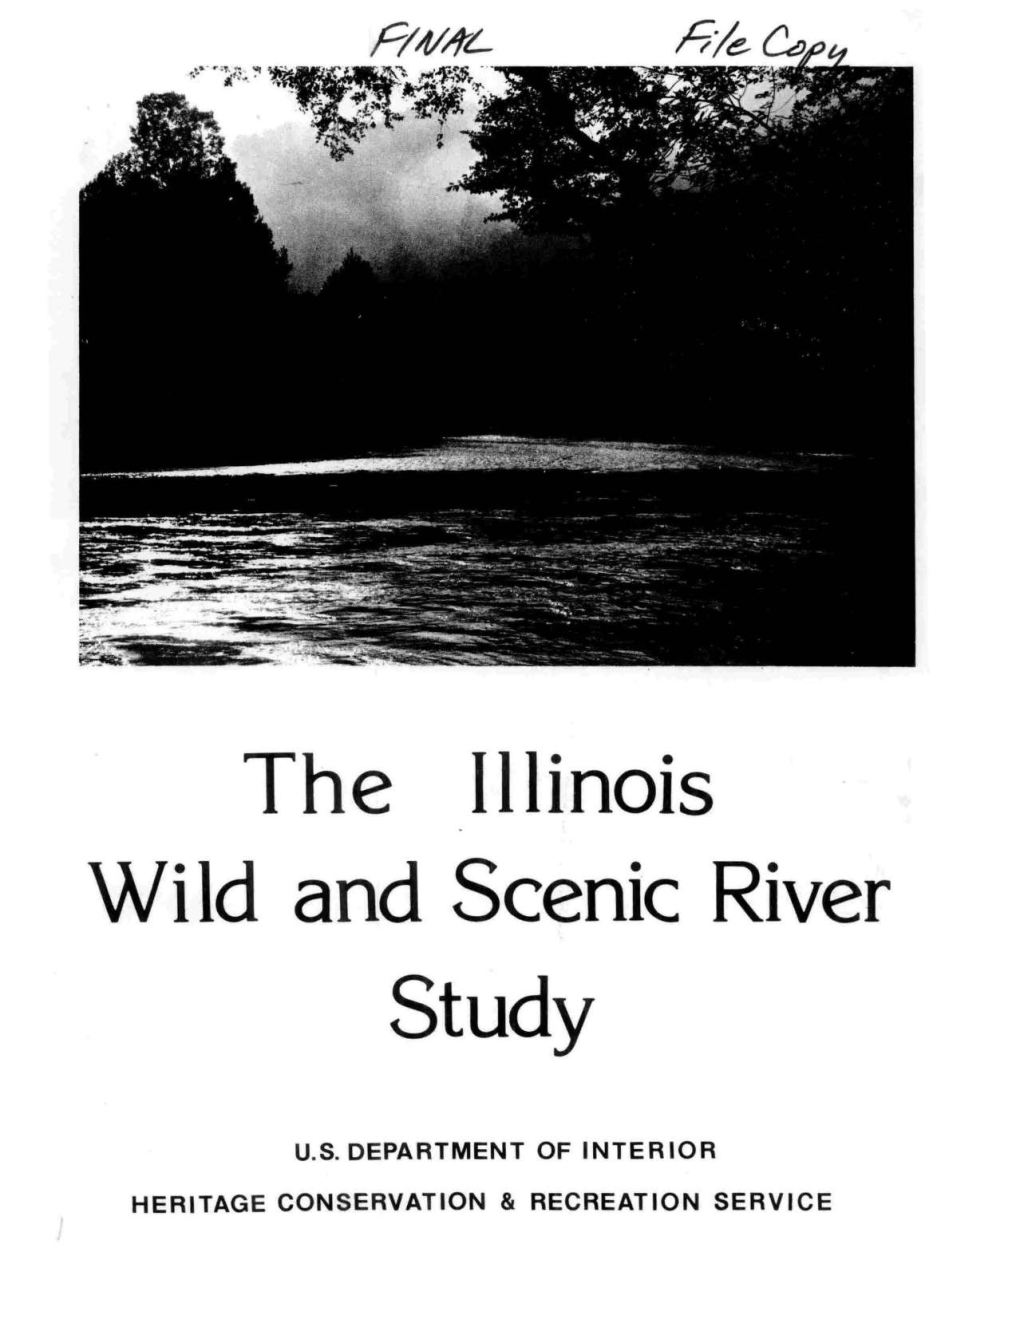 The Illinois Wild and Scenic River Study